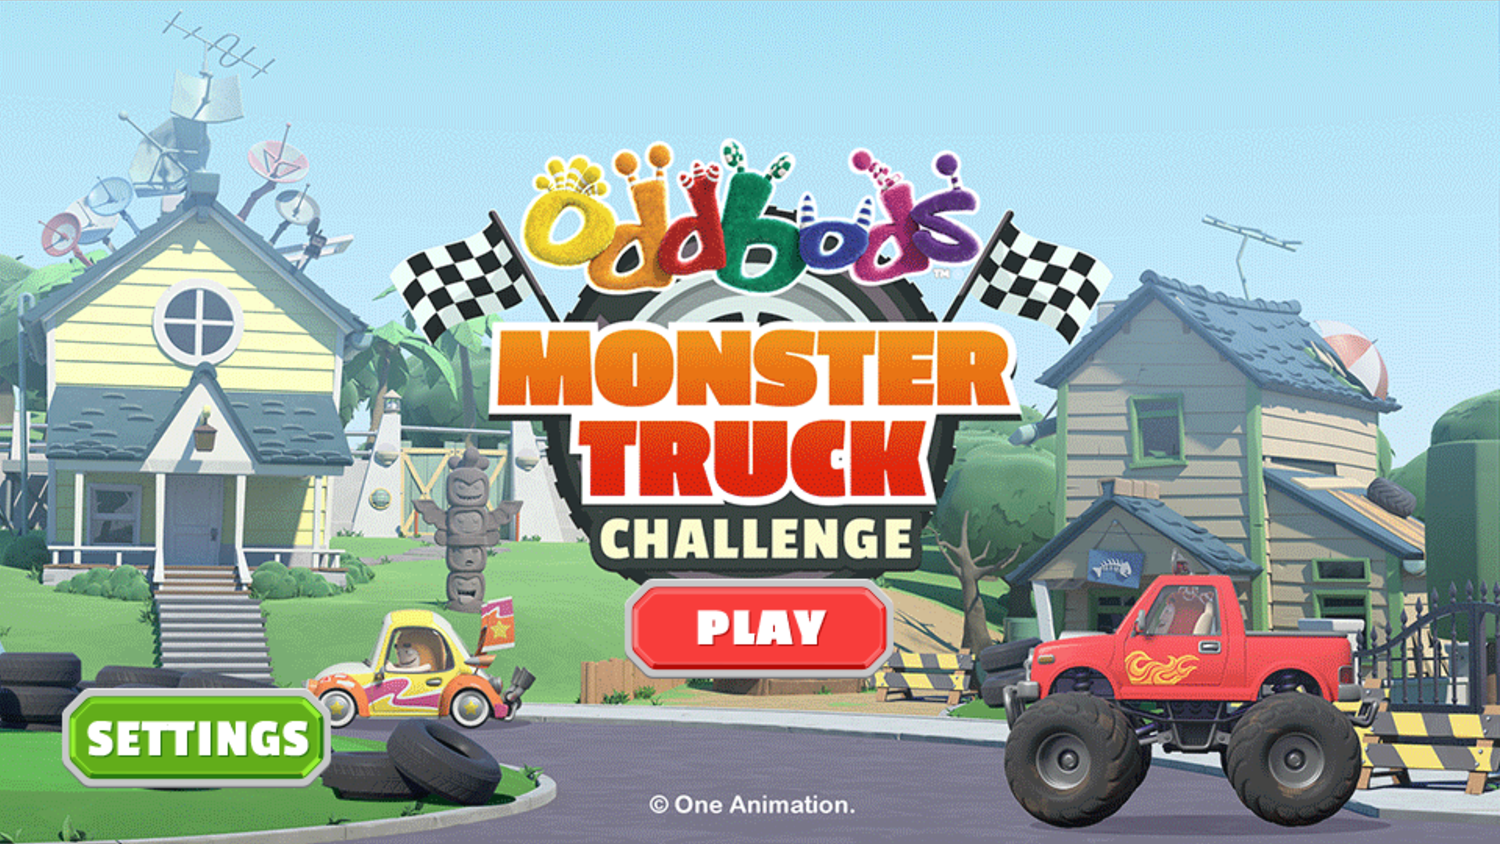 Oddbods Monster Truck Challenge Game Welcome Screen Screenshot.